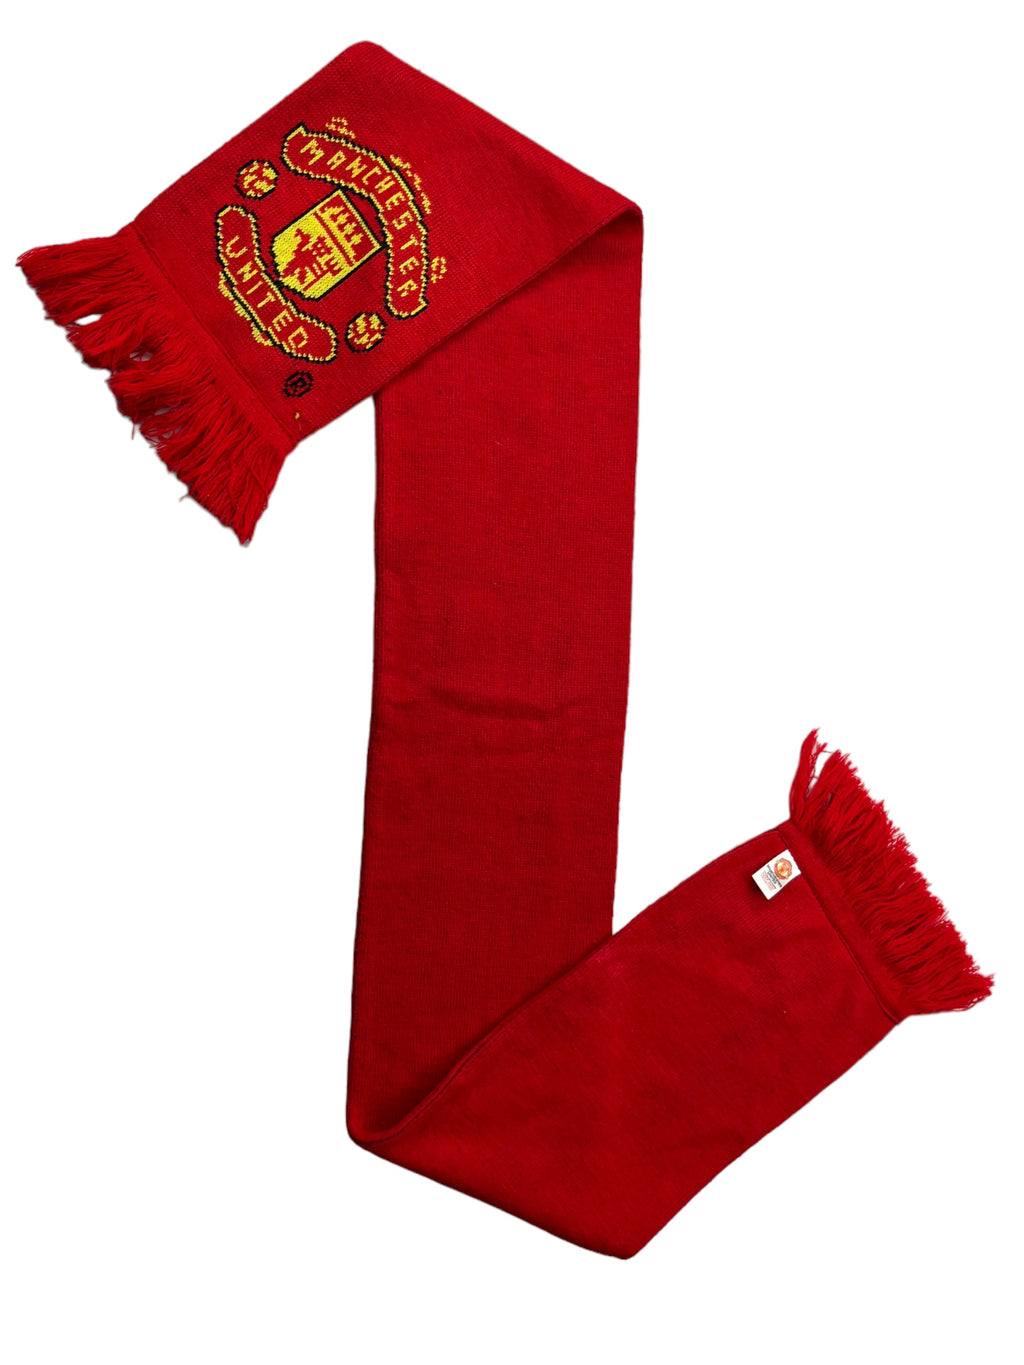 Vintage Manchester United Scarf